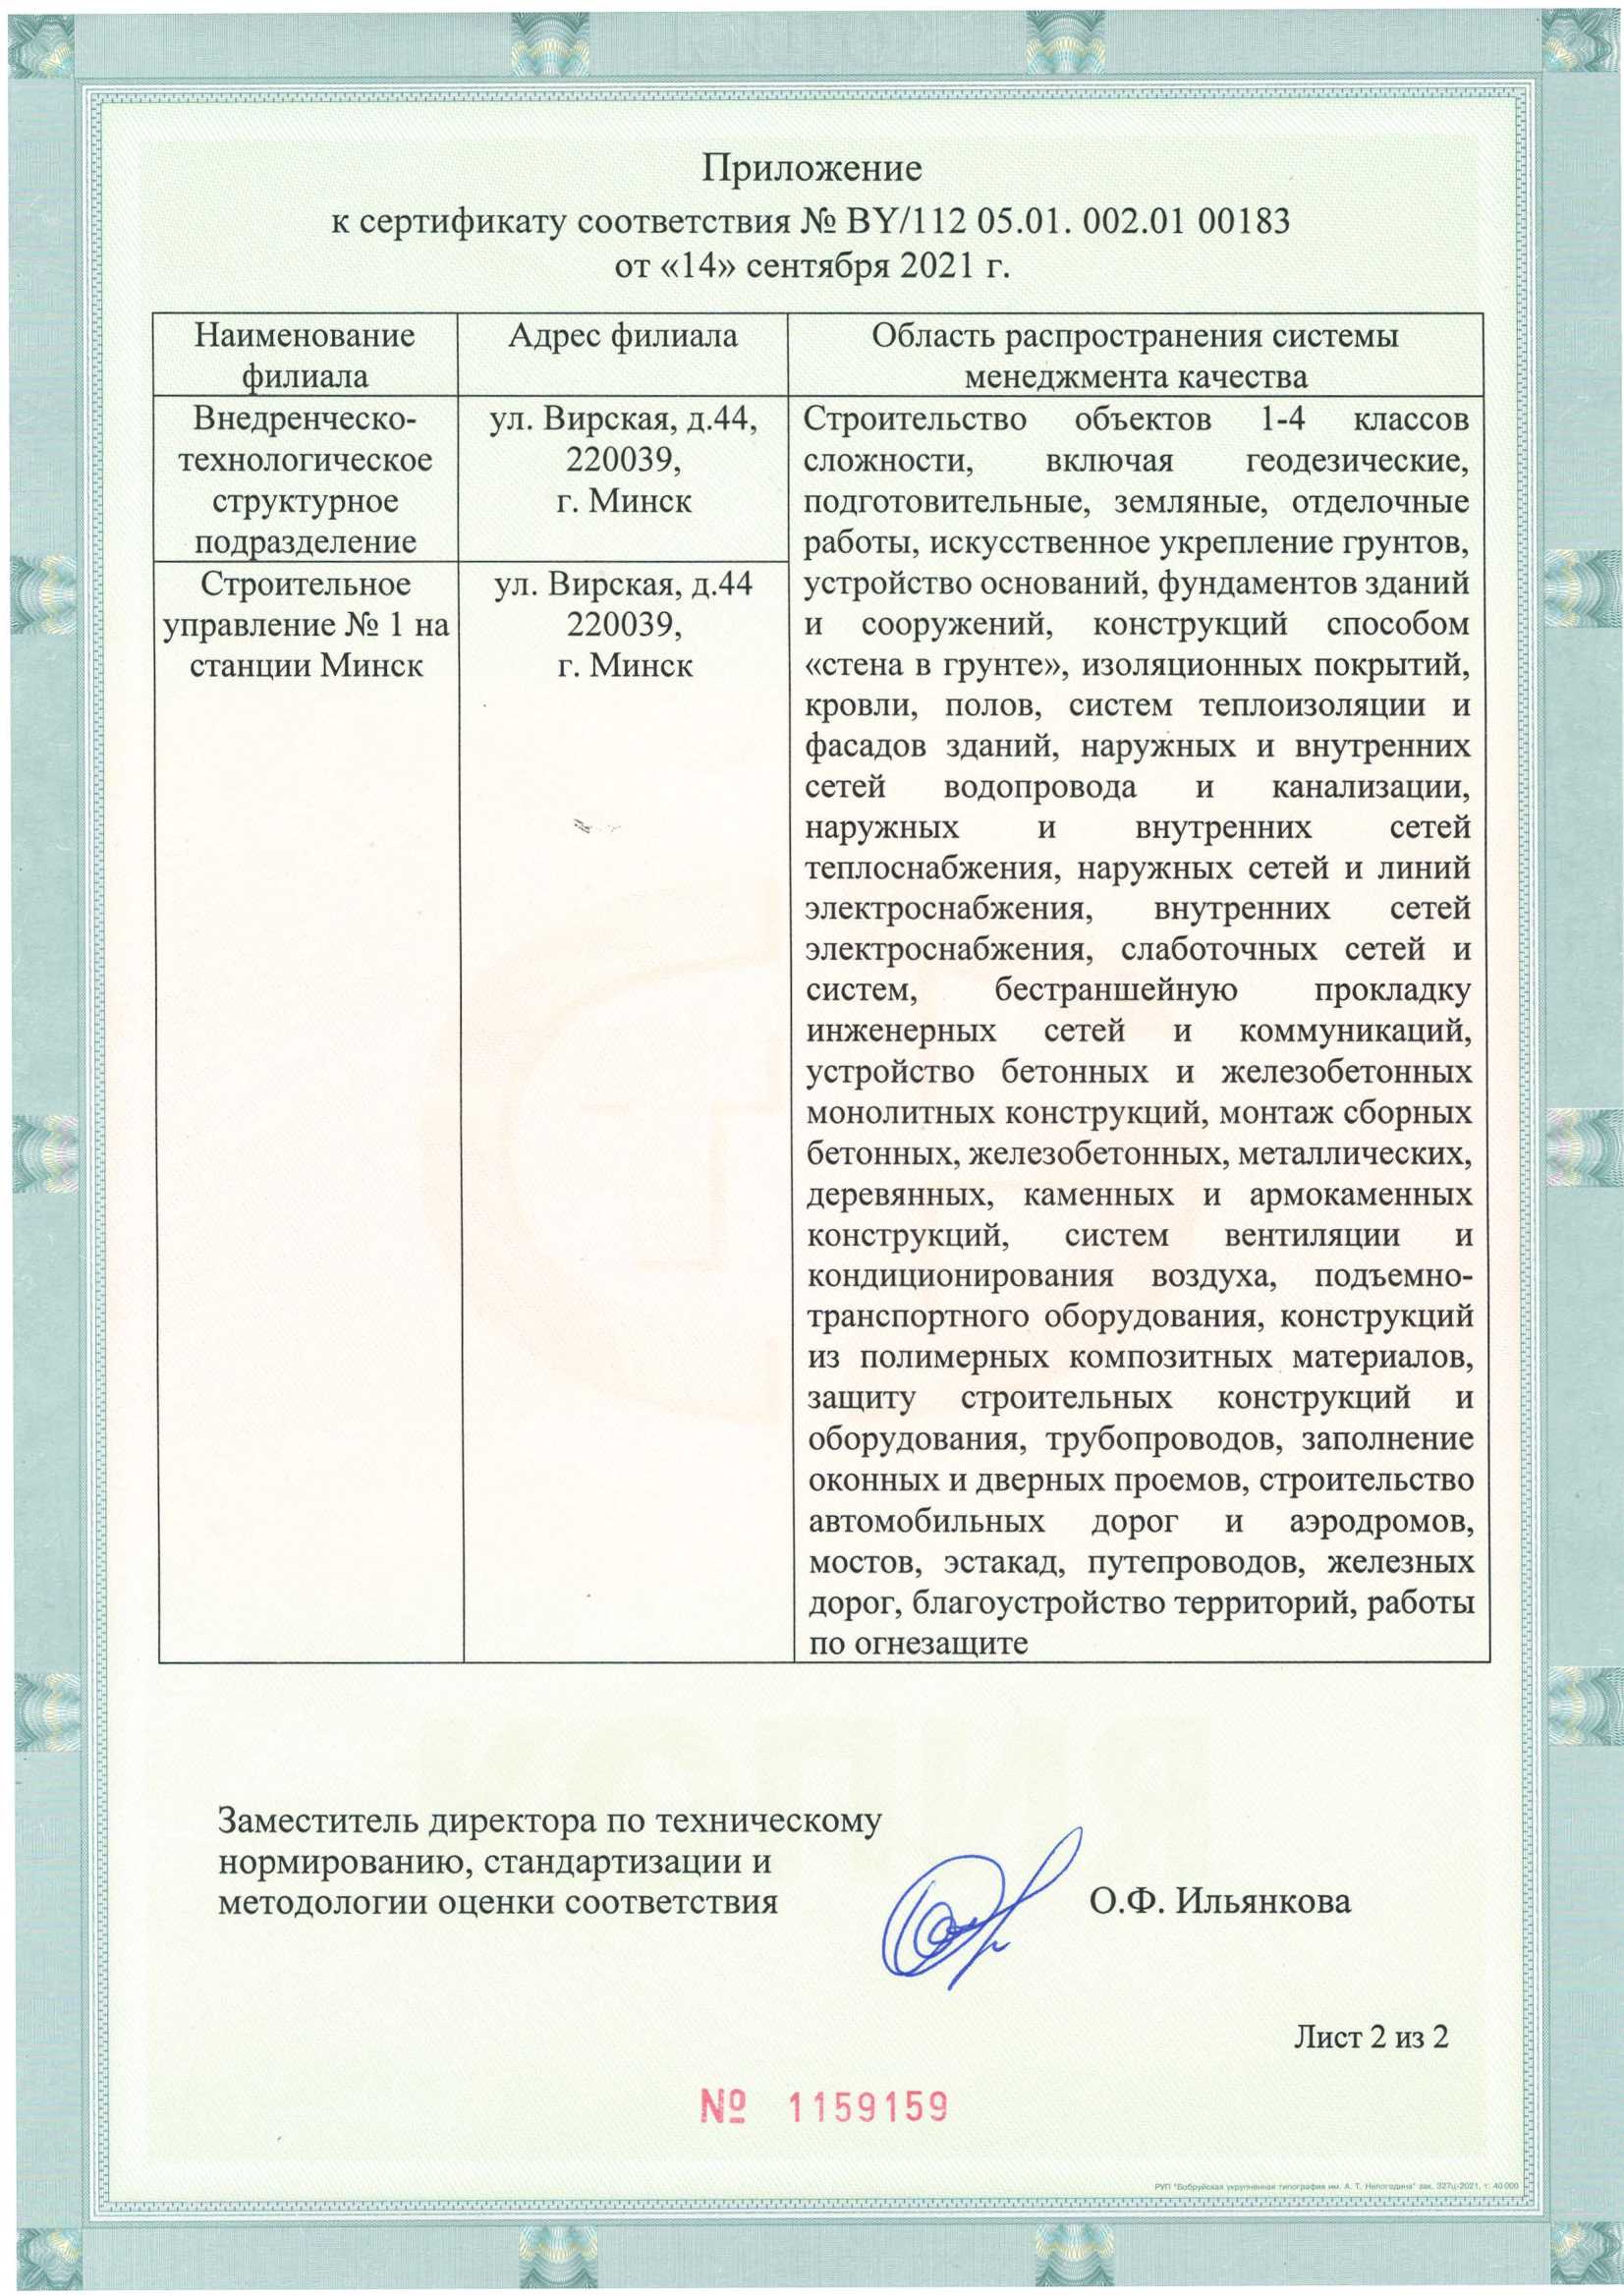 1. sertifikat stb iso 9001-2015 russkiy yazyk-2021 3